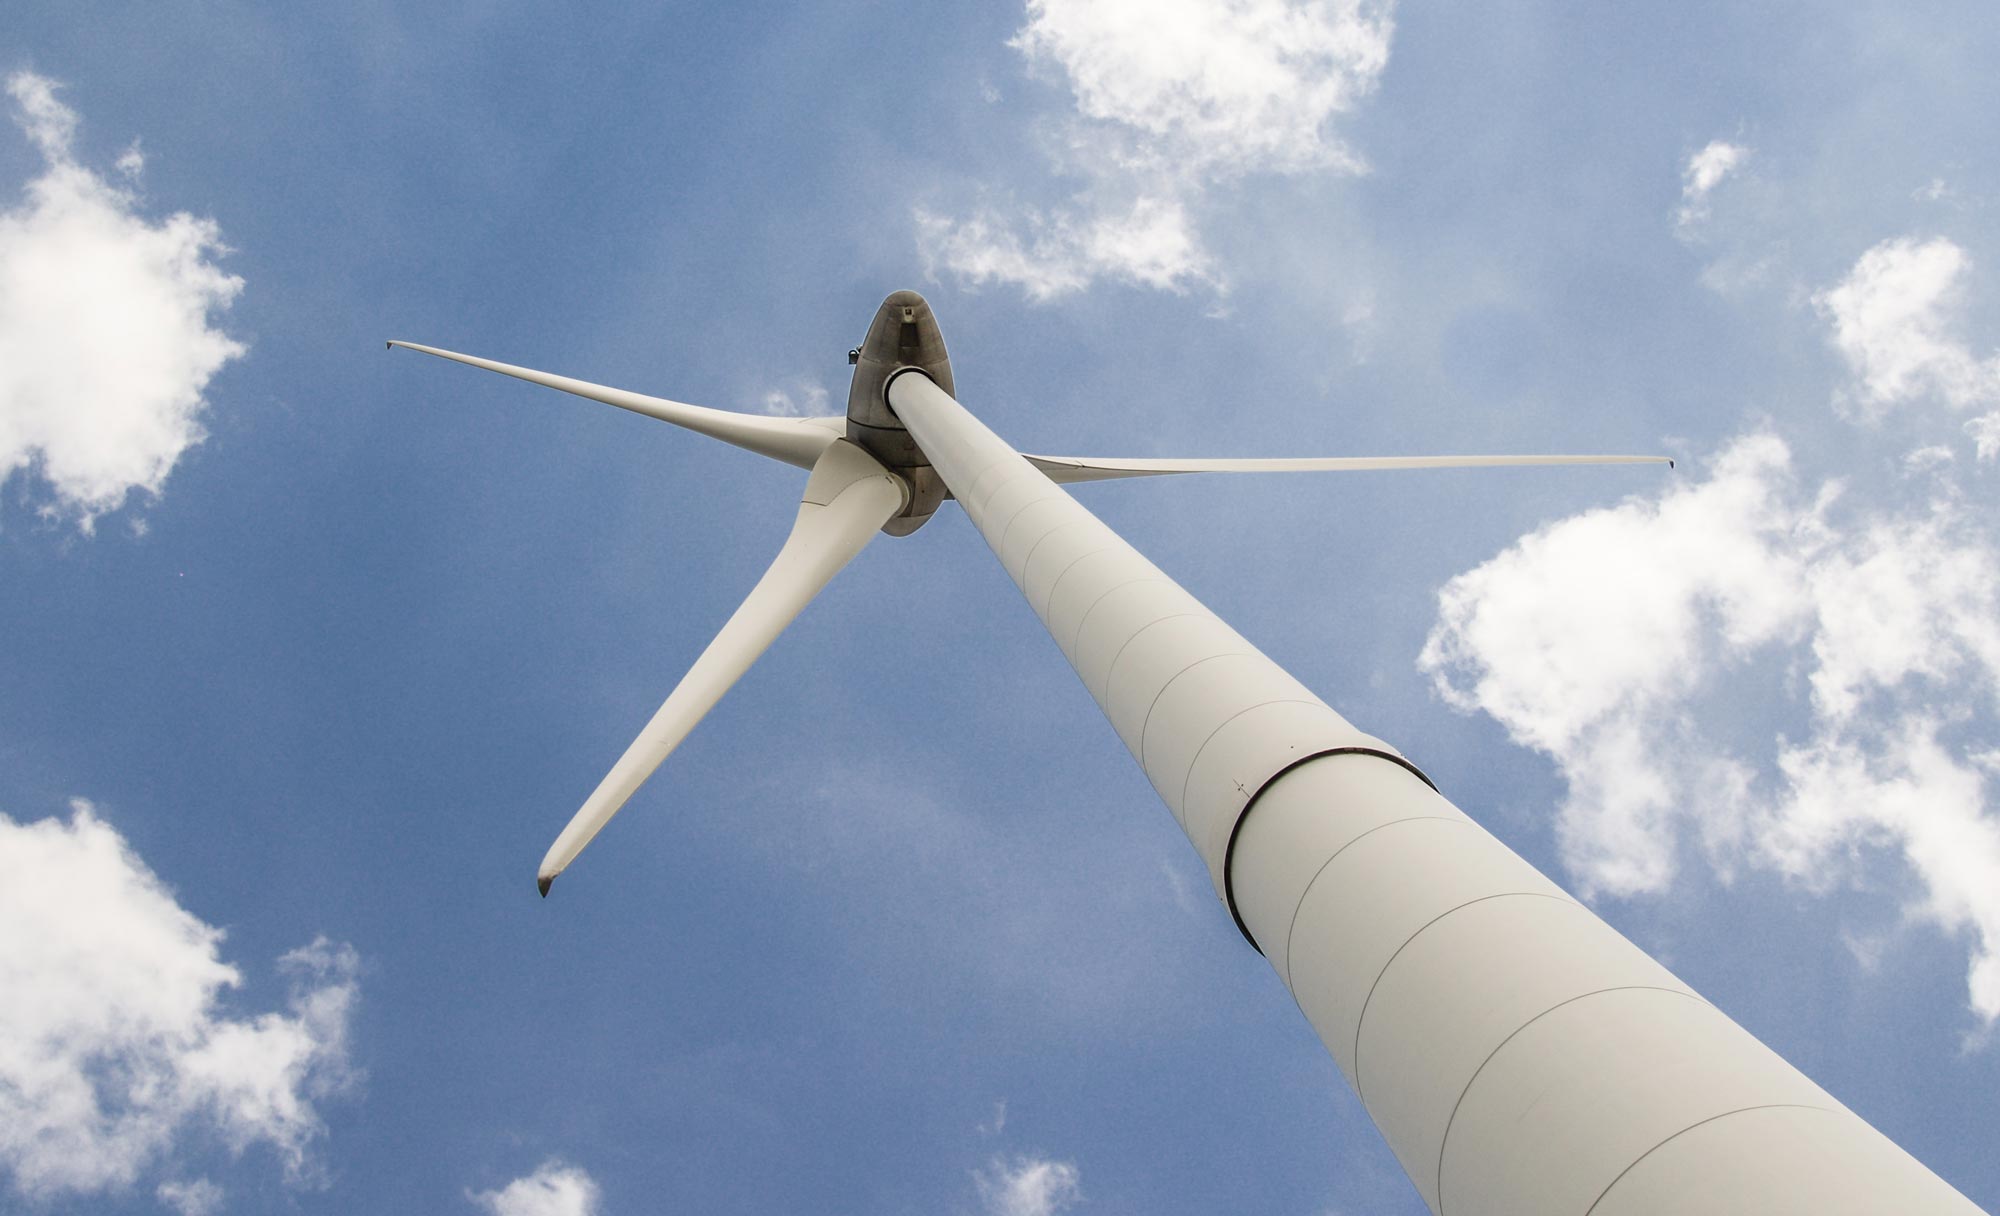 Wind turbine from below (Image: Skitterphoto/Pexels)